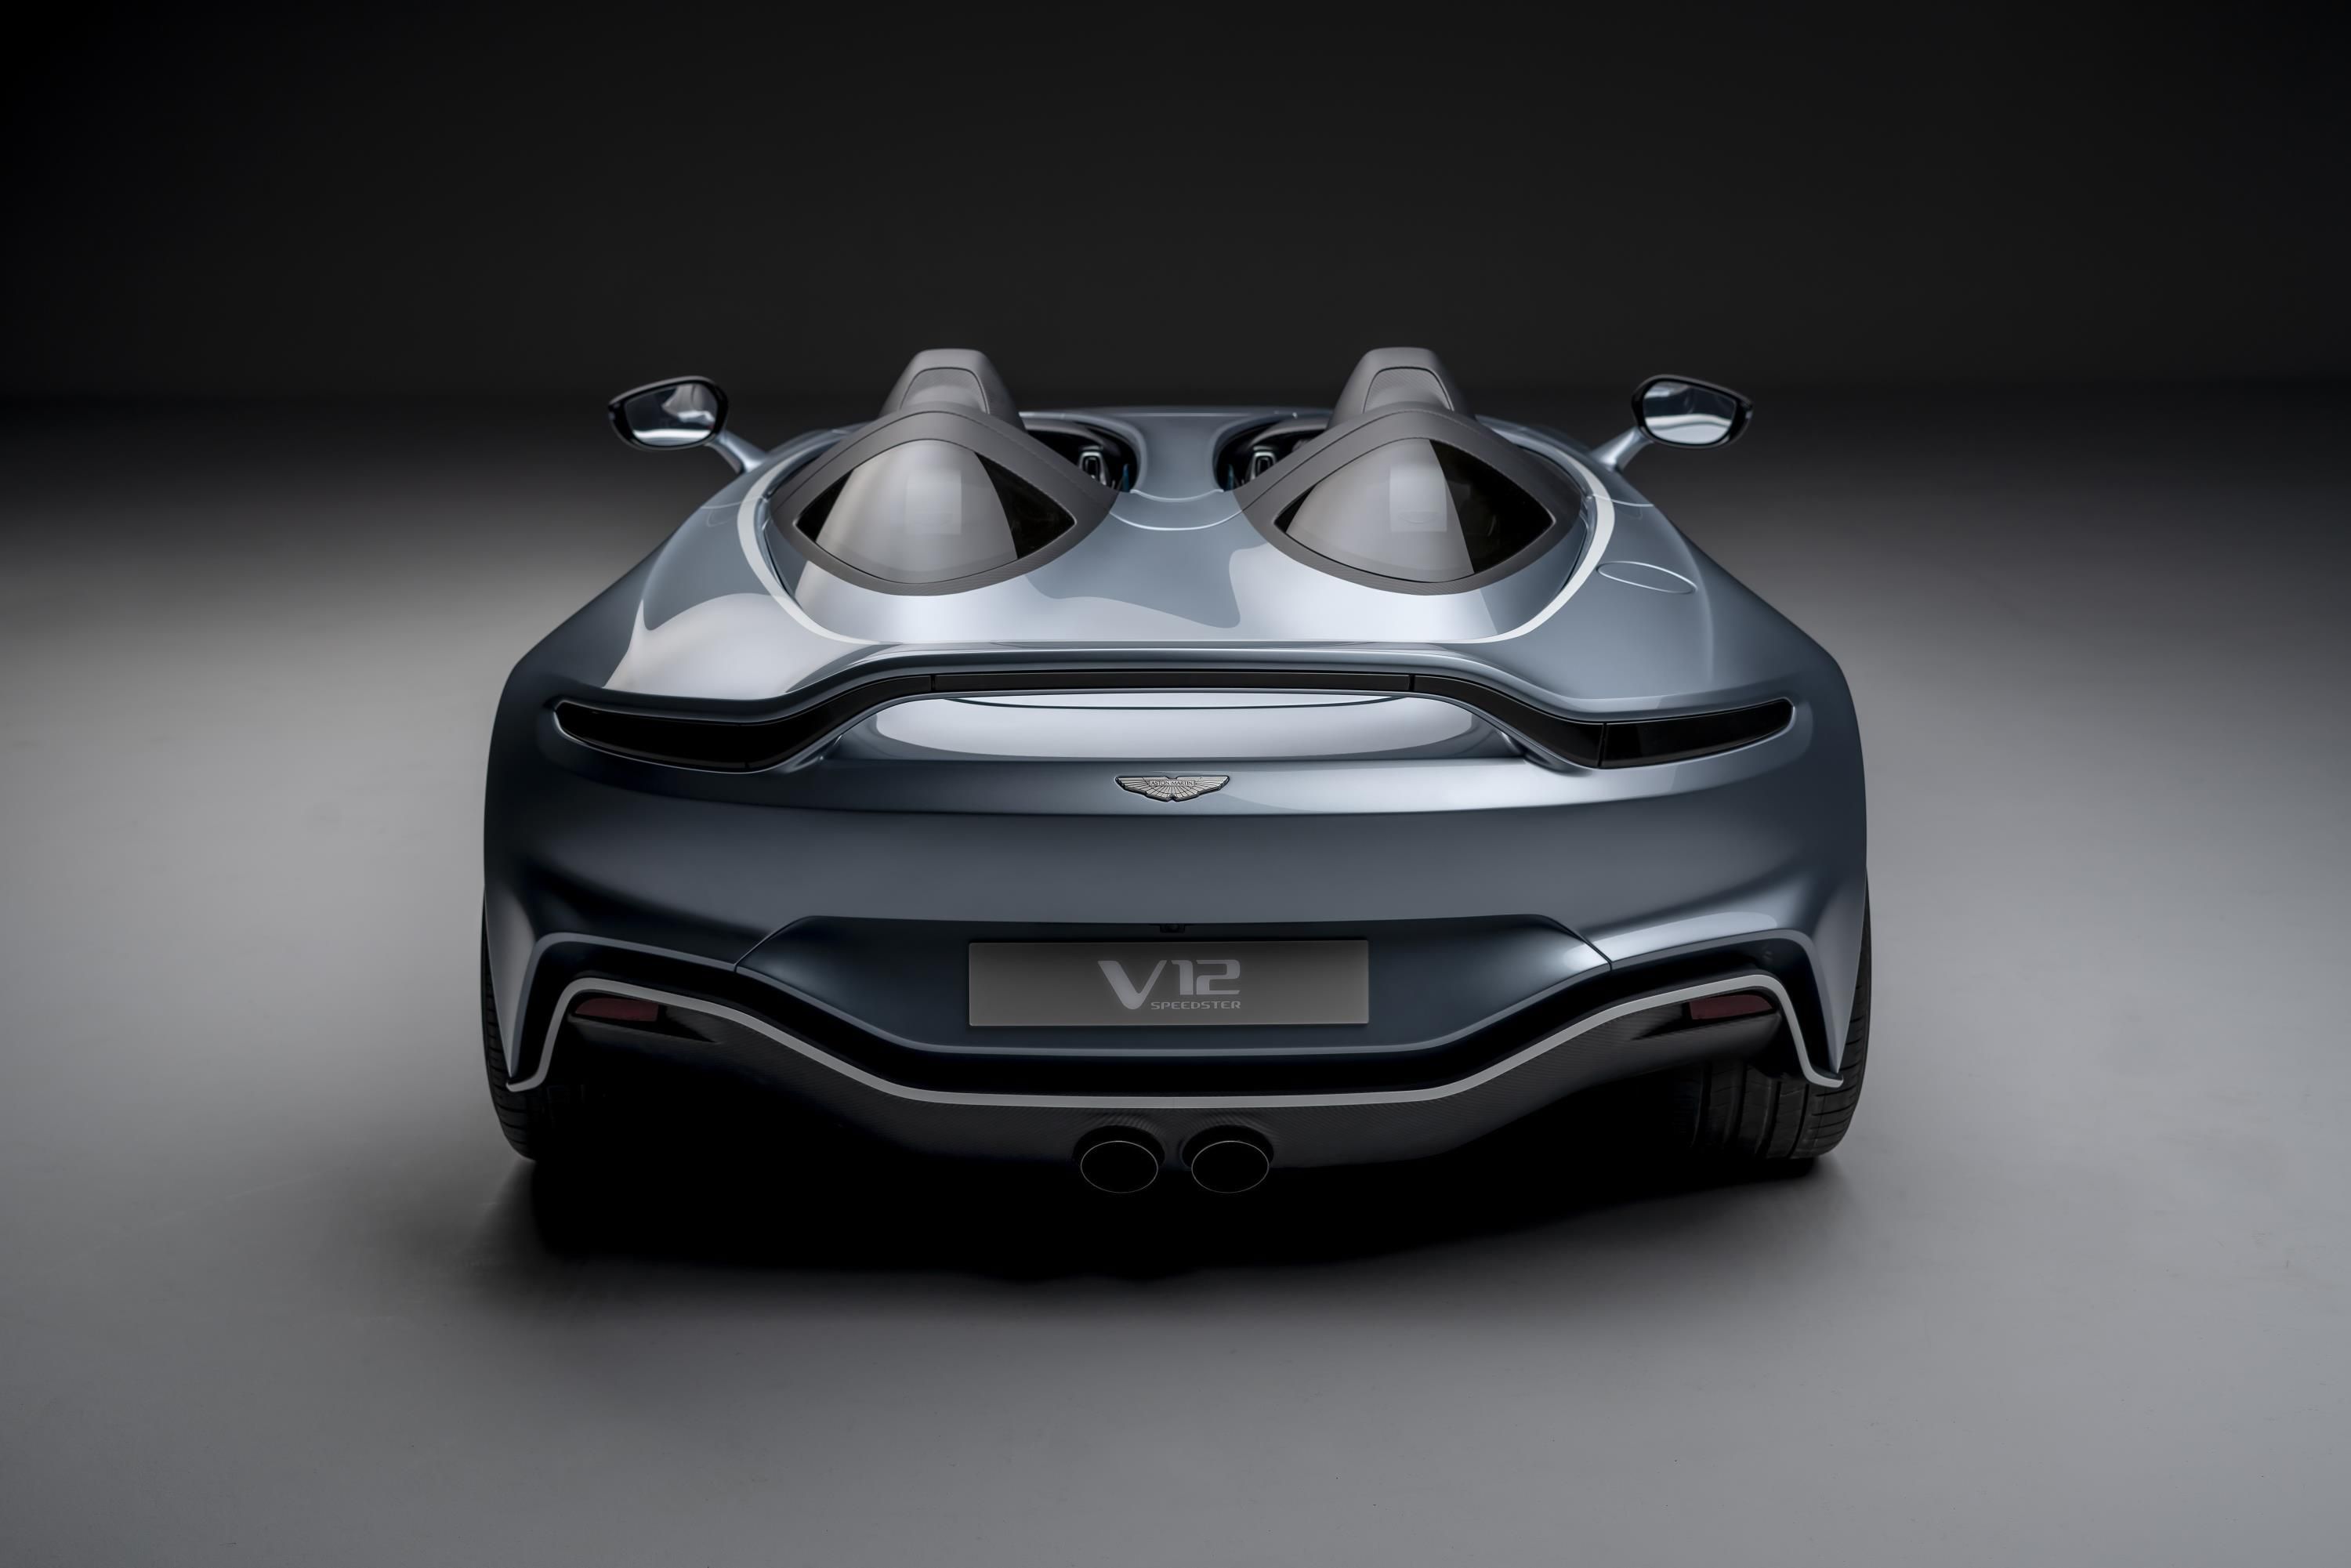 Aston Martin V12 Speedster: A fighter jet supercar without windshields